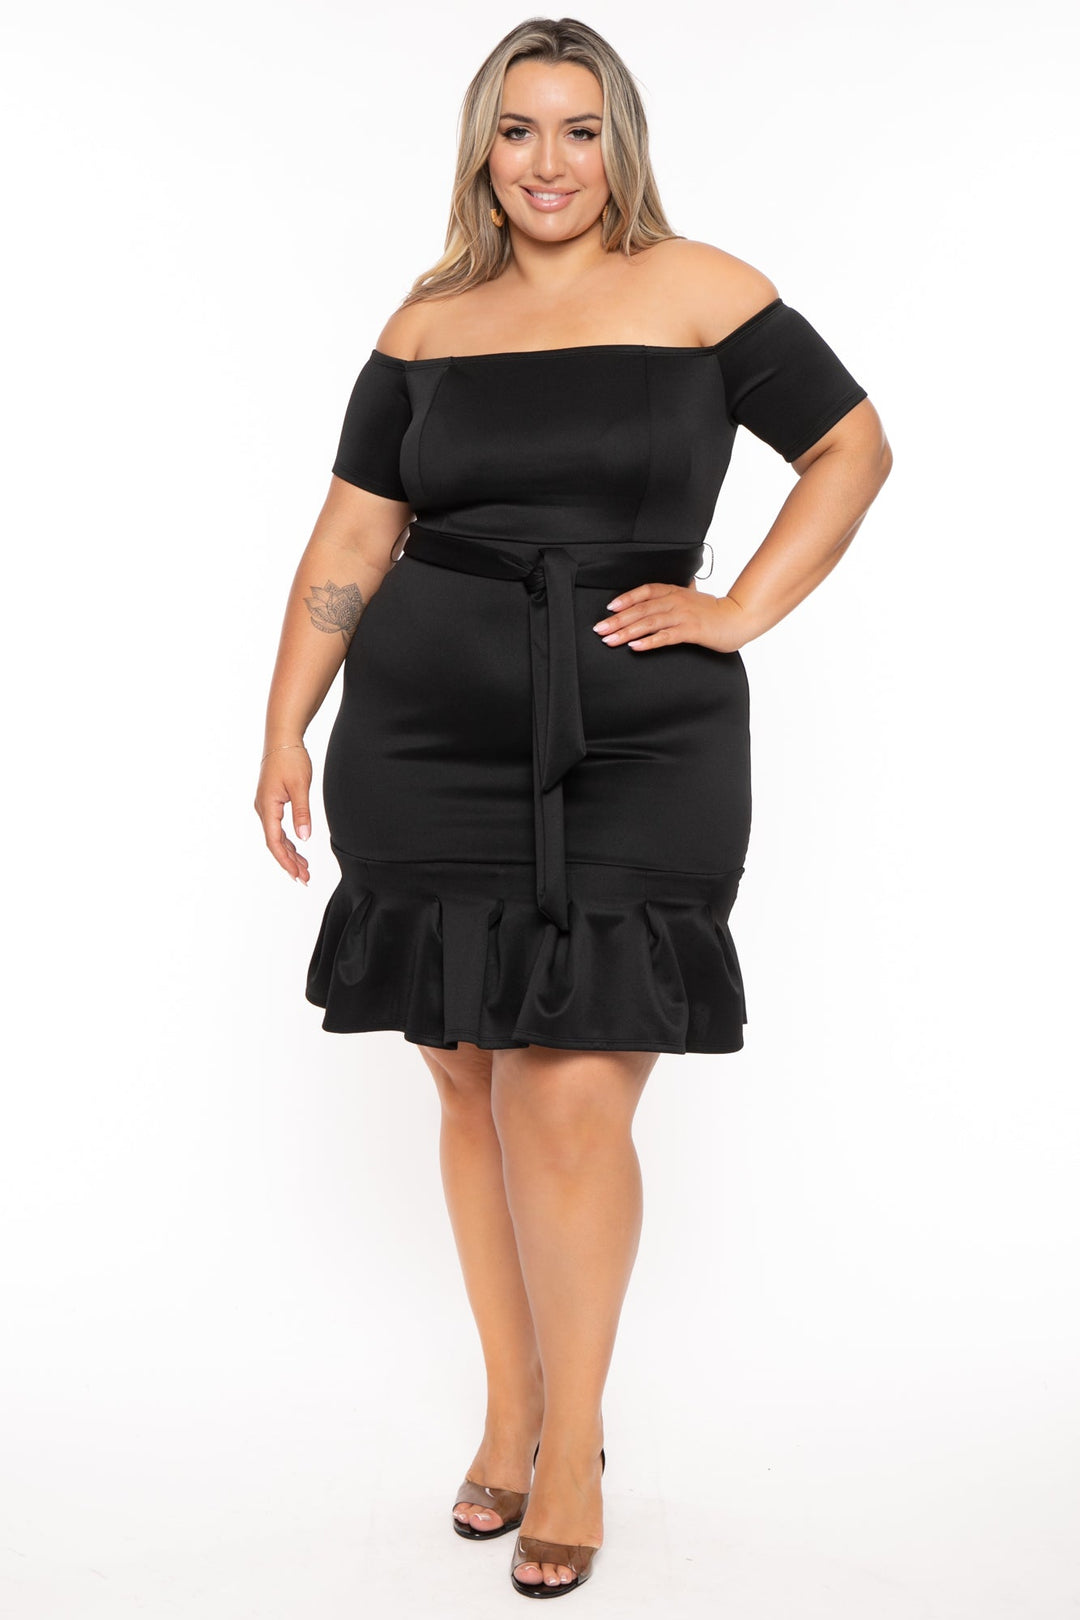 Curvy Sense Dresses 1X / Black Plus Size Debora Off The Shoulder Dress - Black